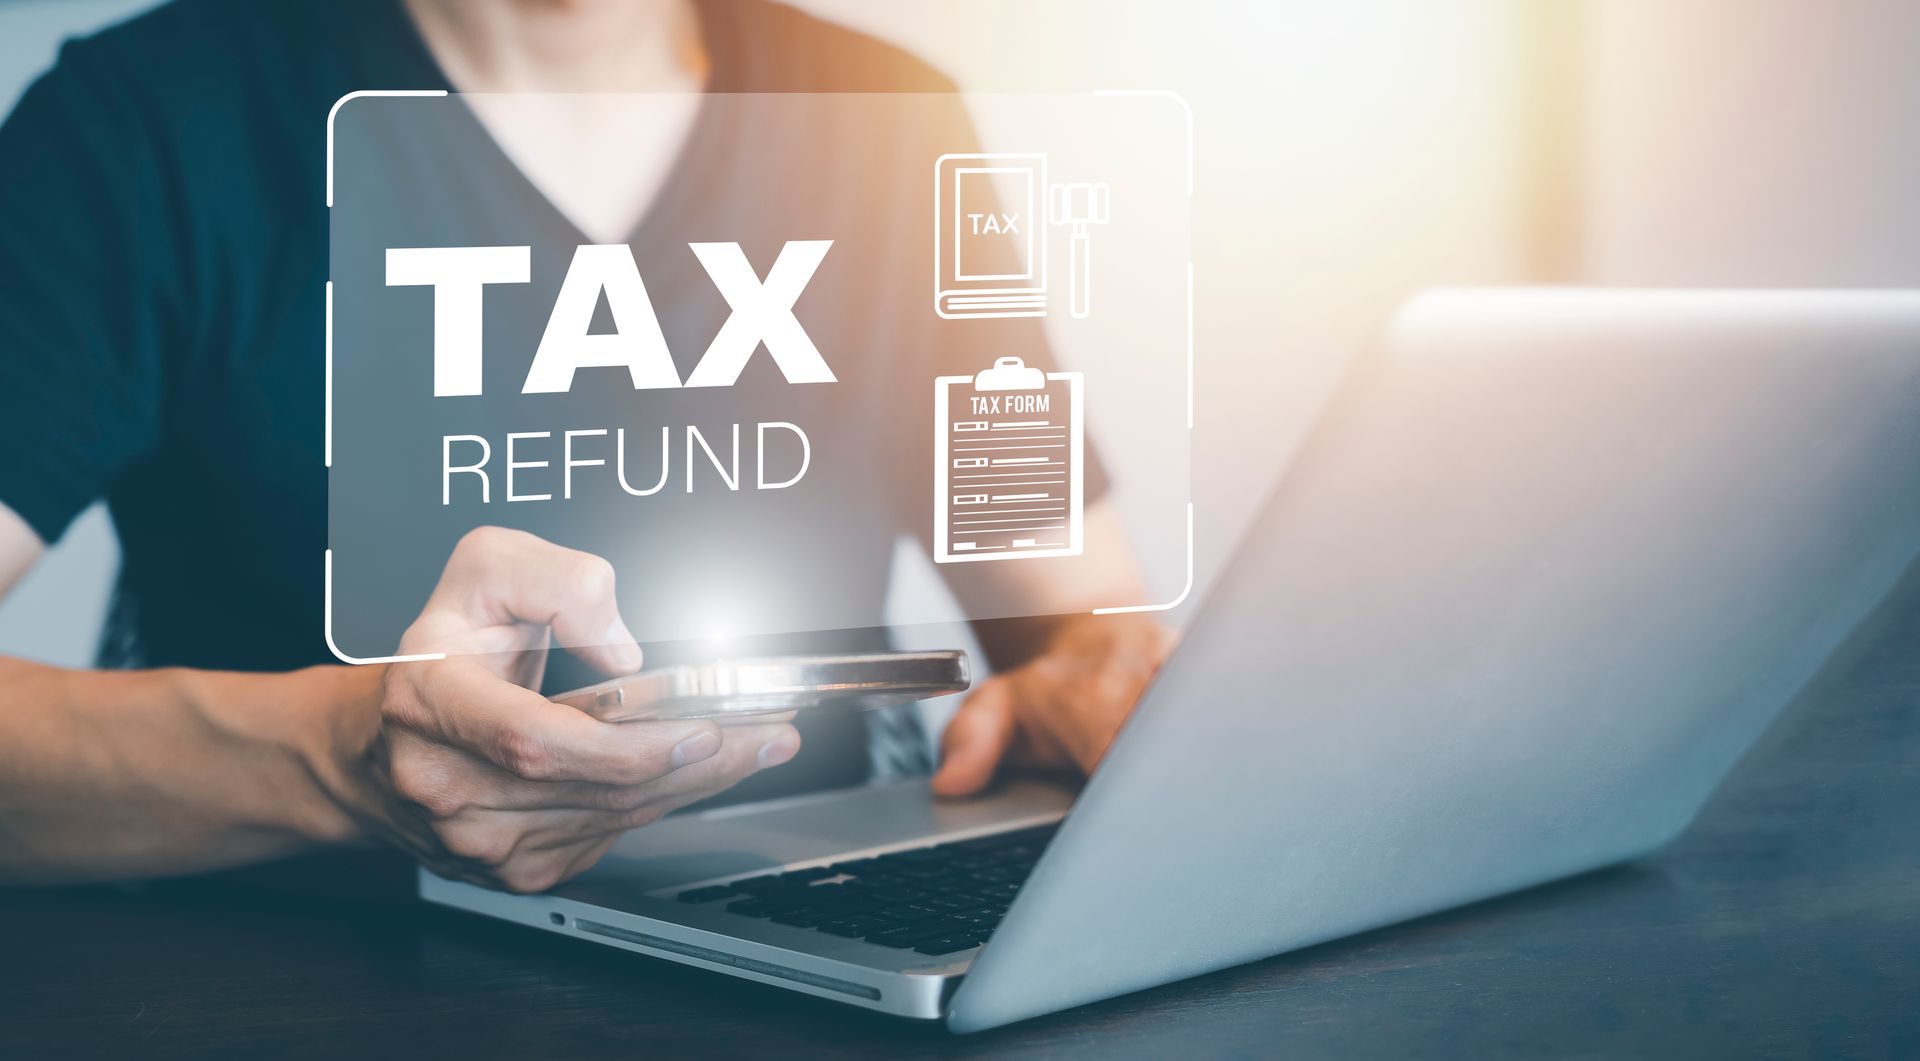 Tax Refund Image